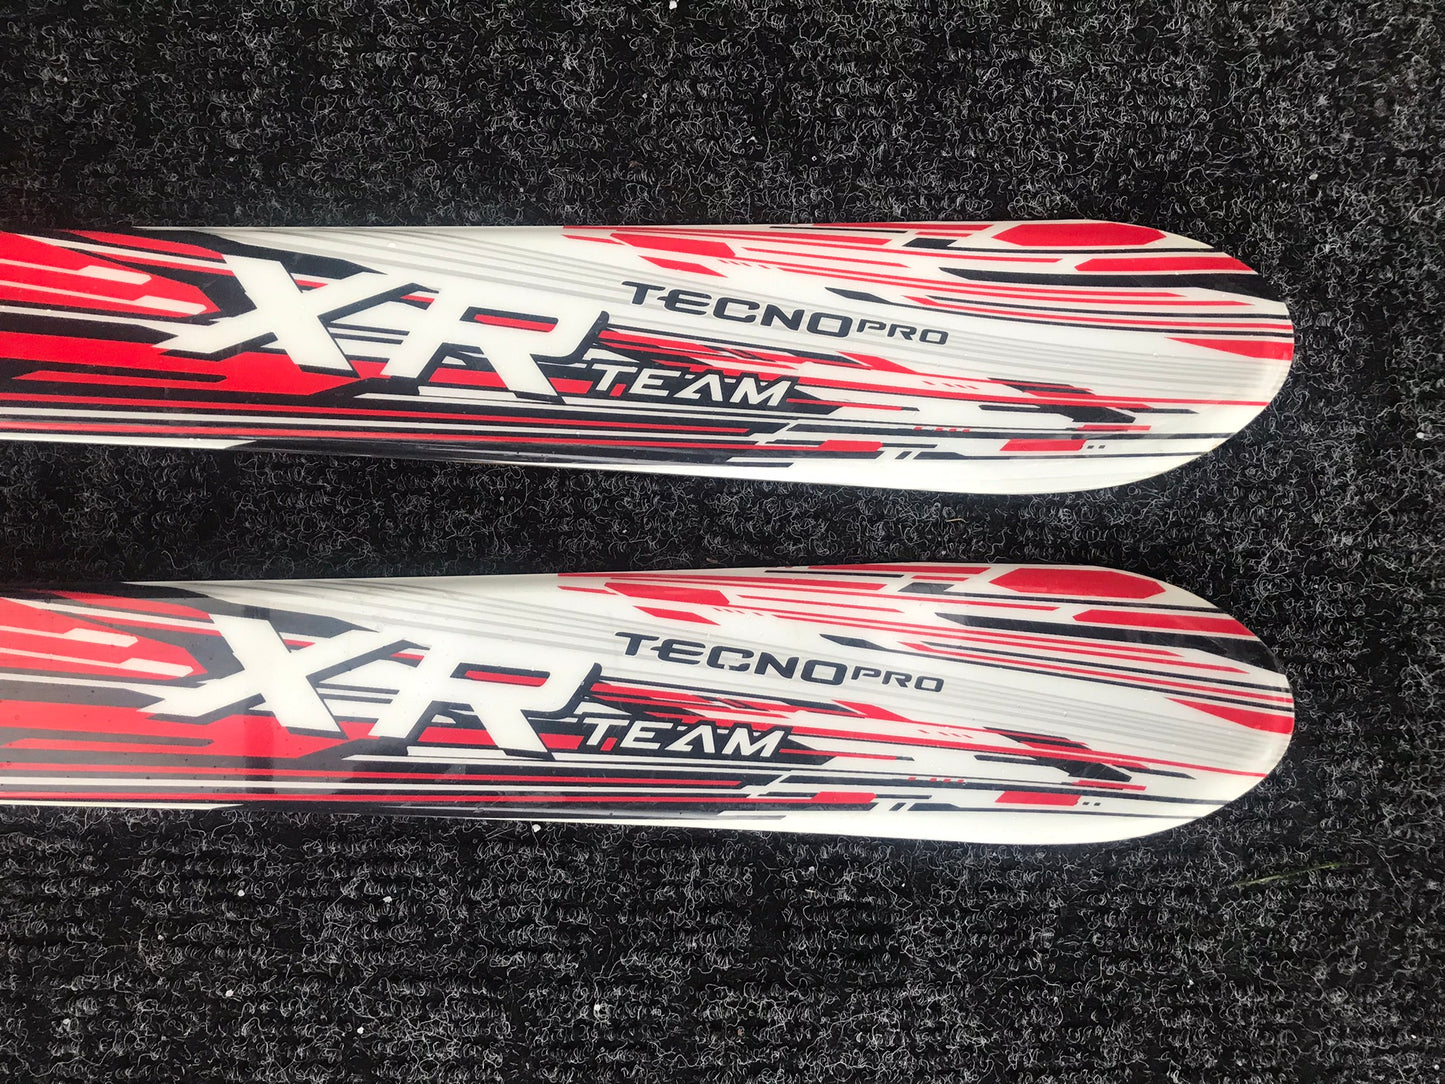 Ski 130 Tecno Pro XR Team White Black Red Parabolic With Bindings